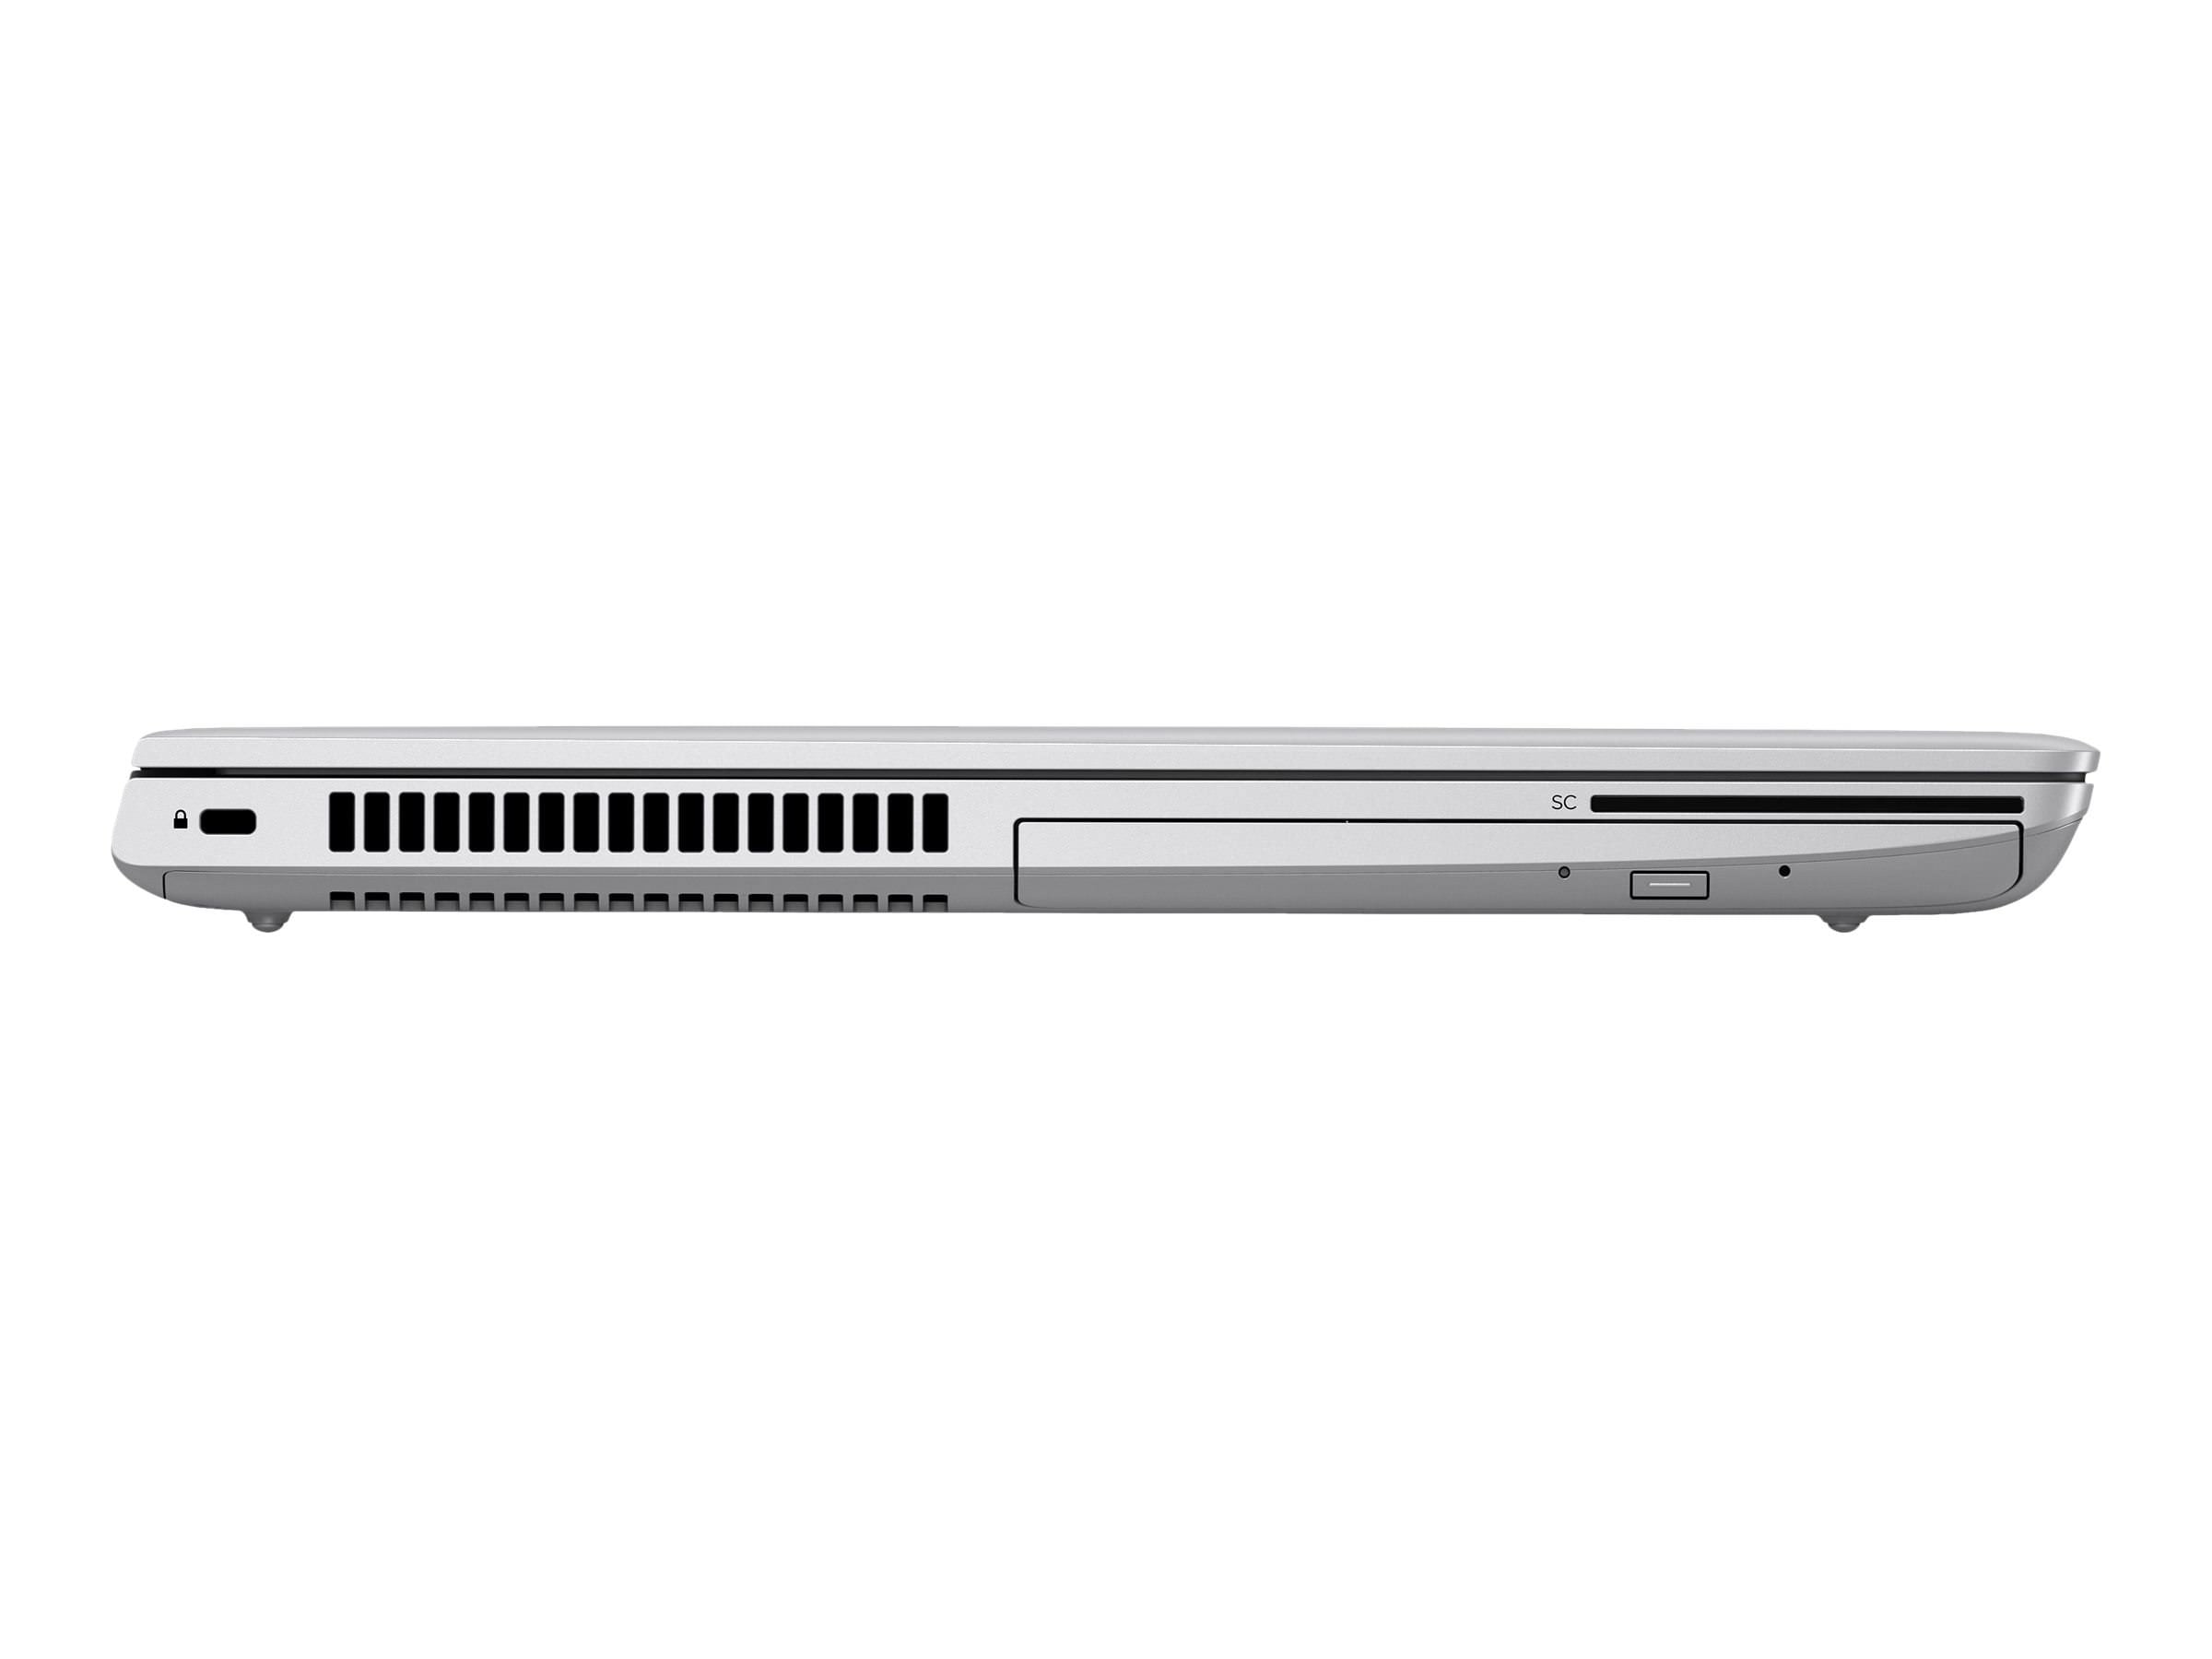 HP ProBook 650 G4 Core i5-7200U 2.5GHz 8GB 256GB 15.6